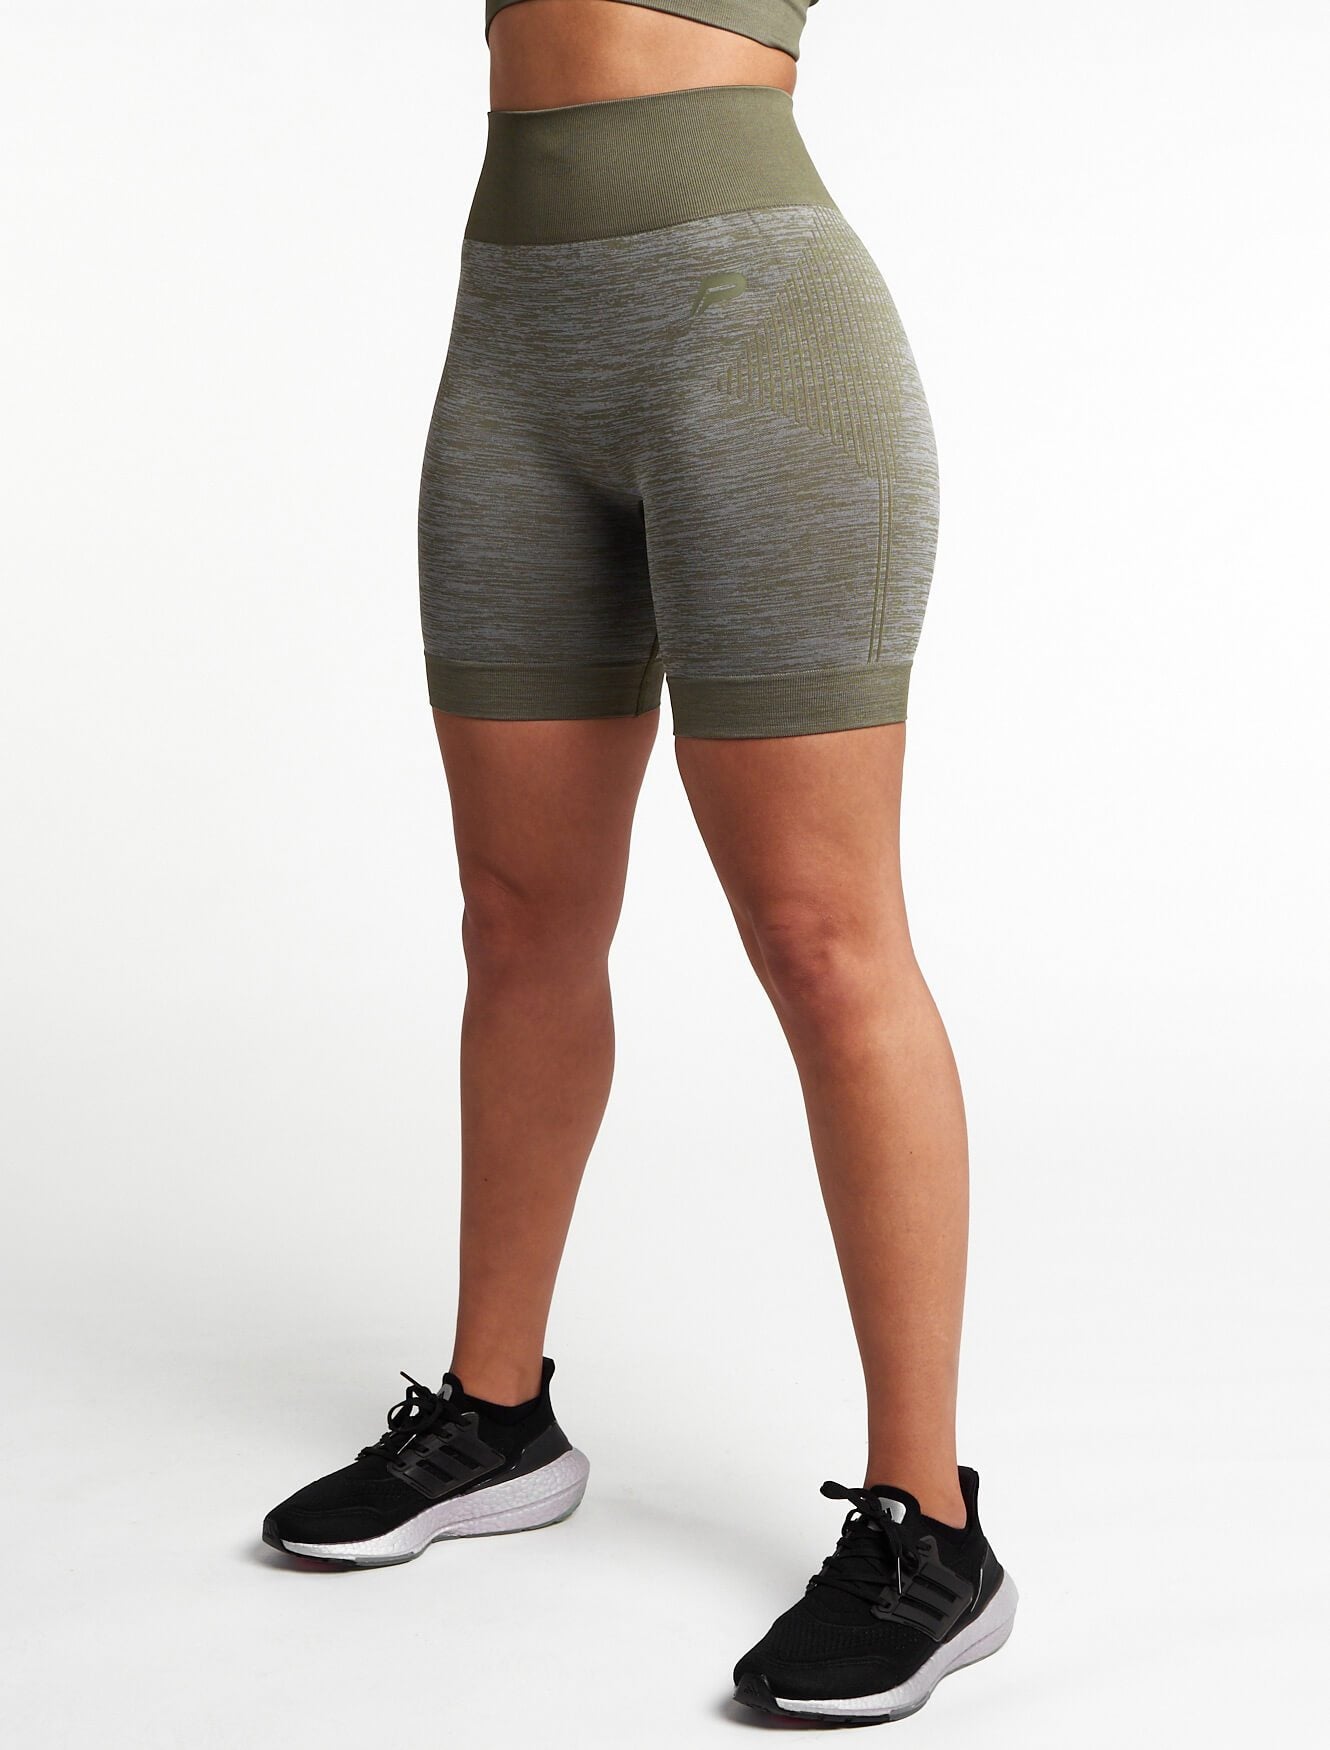 ADAPT Seamless Shorts / Khaki Pursue Fitness 6